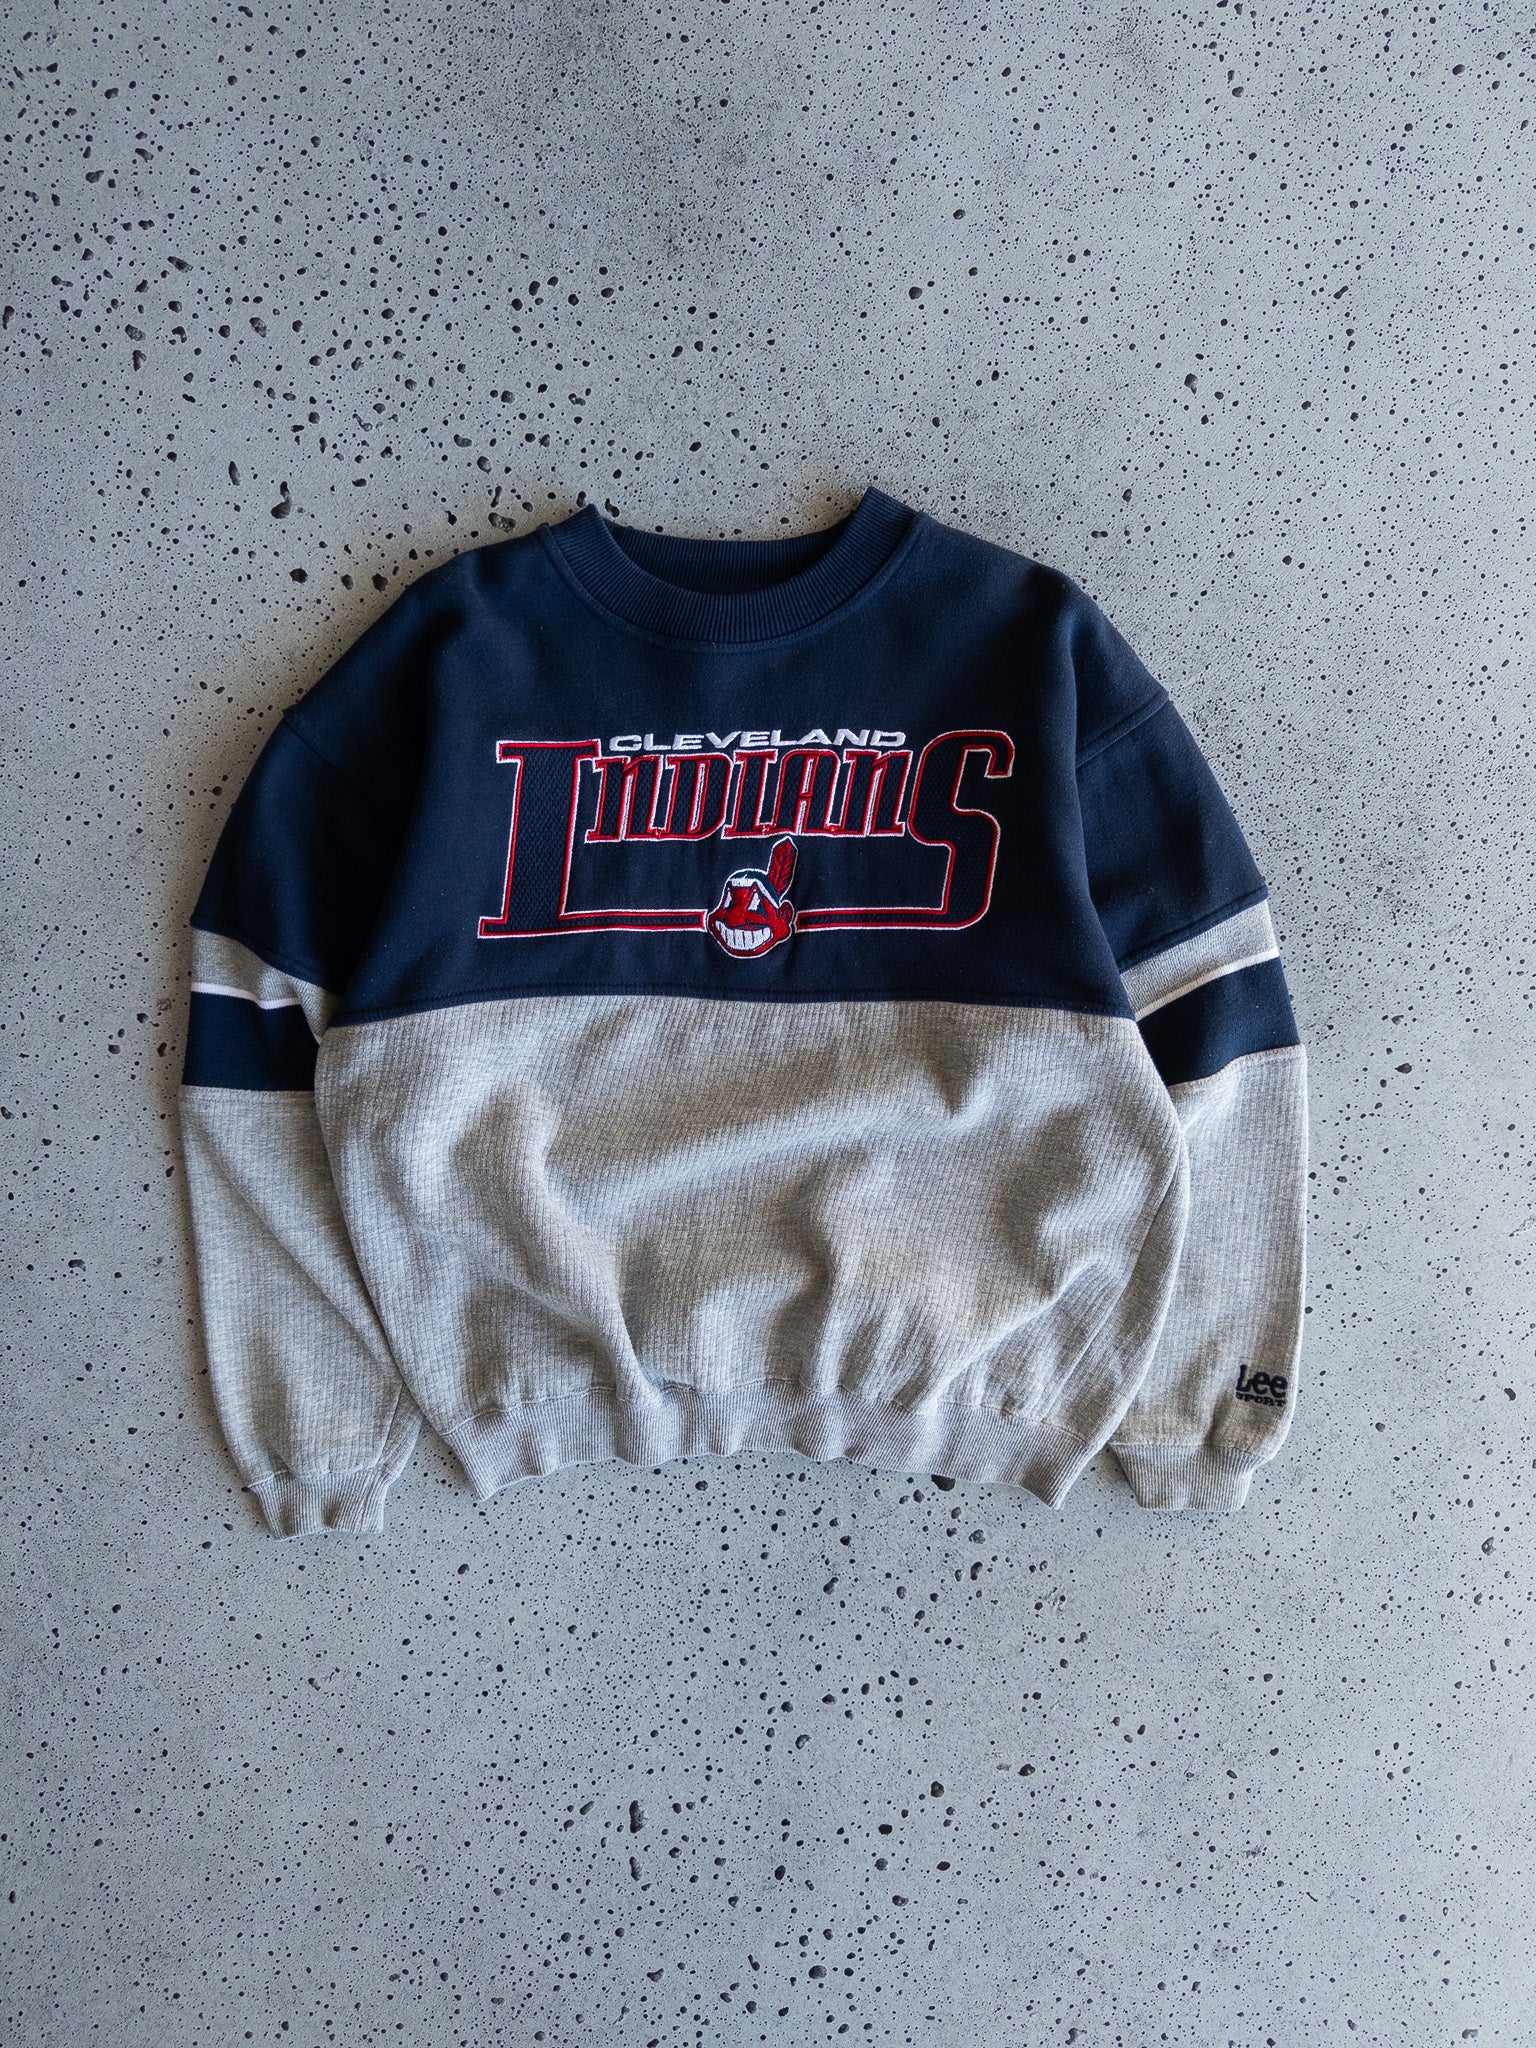 Vintage Cleveland Indians Sweatshirt (M)